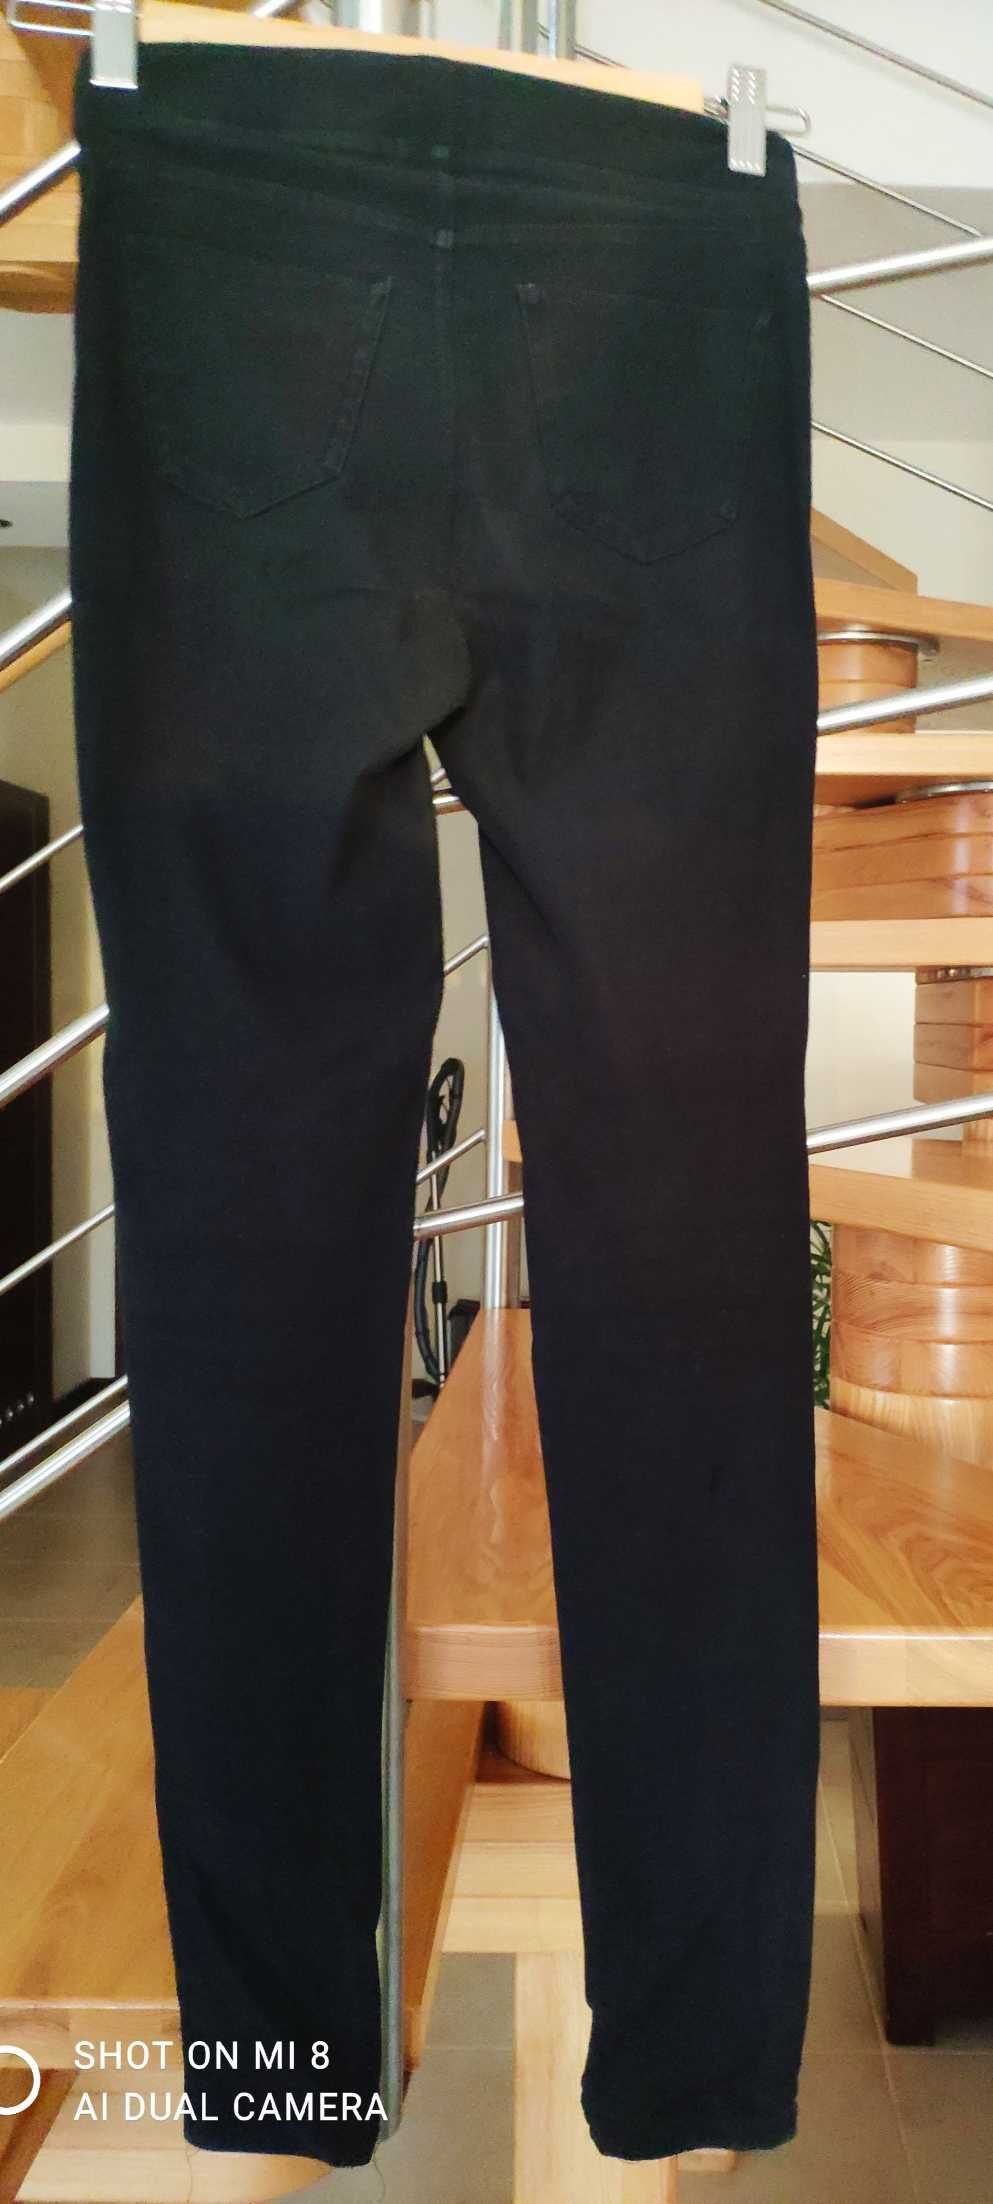 Legginsy tregginsy spodnie czarne z cekinami H&M 158